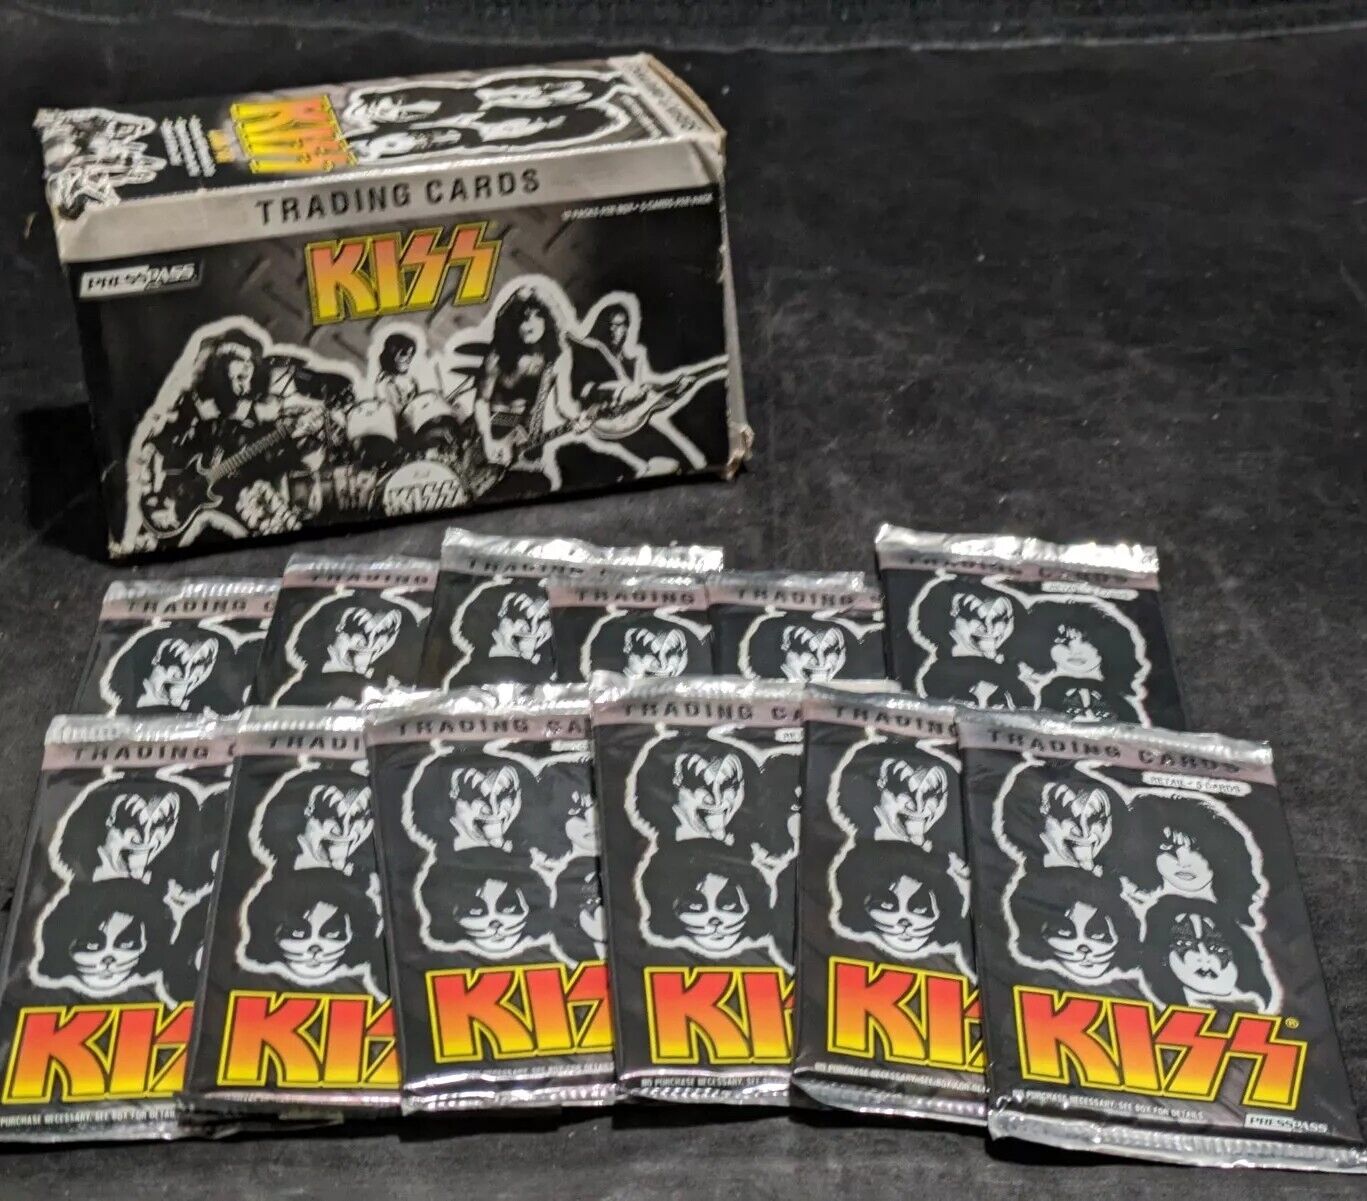 2009 PressPass KISS Trading Cards Lot Of 12 Unopened Packs In Original Box 